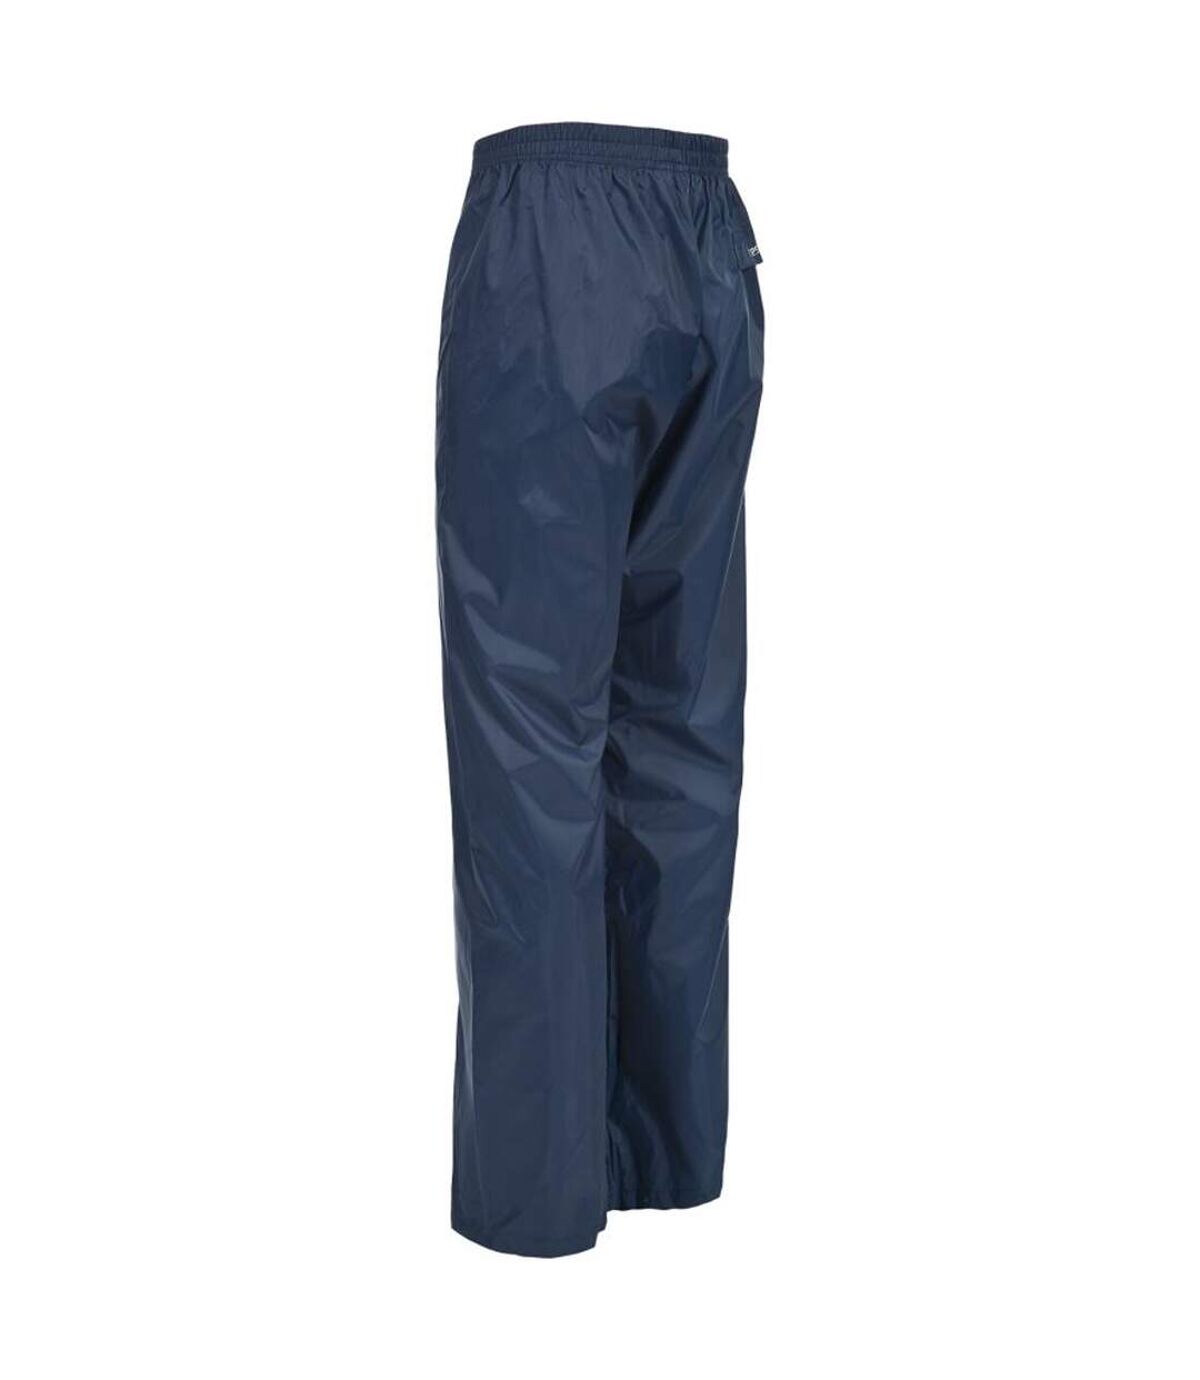 Trespass Adults Unisex Packup Trouser Waterproof Packaway Pants/Trousers (Navy)